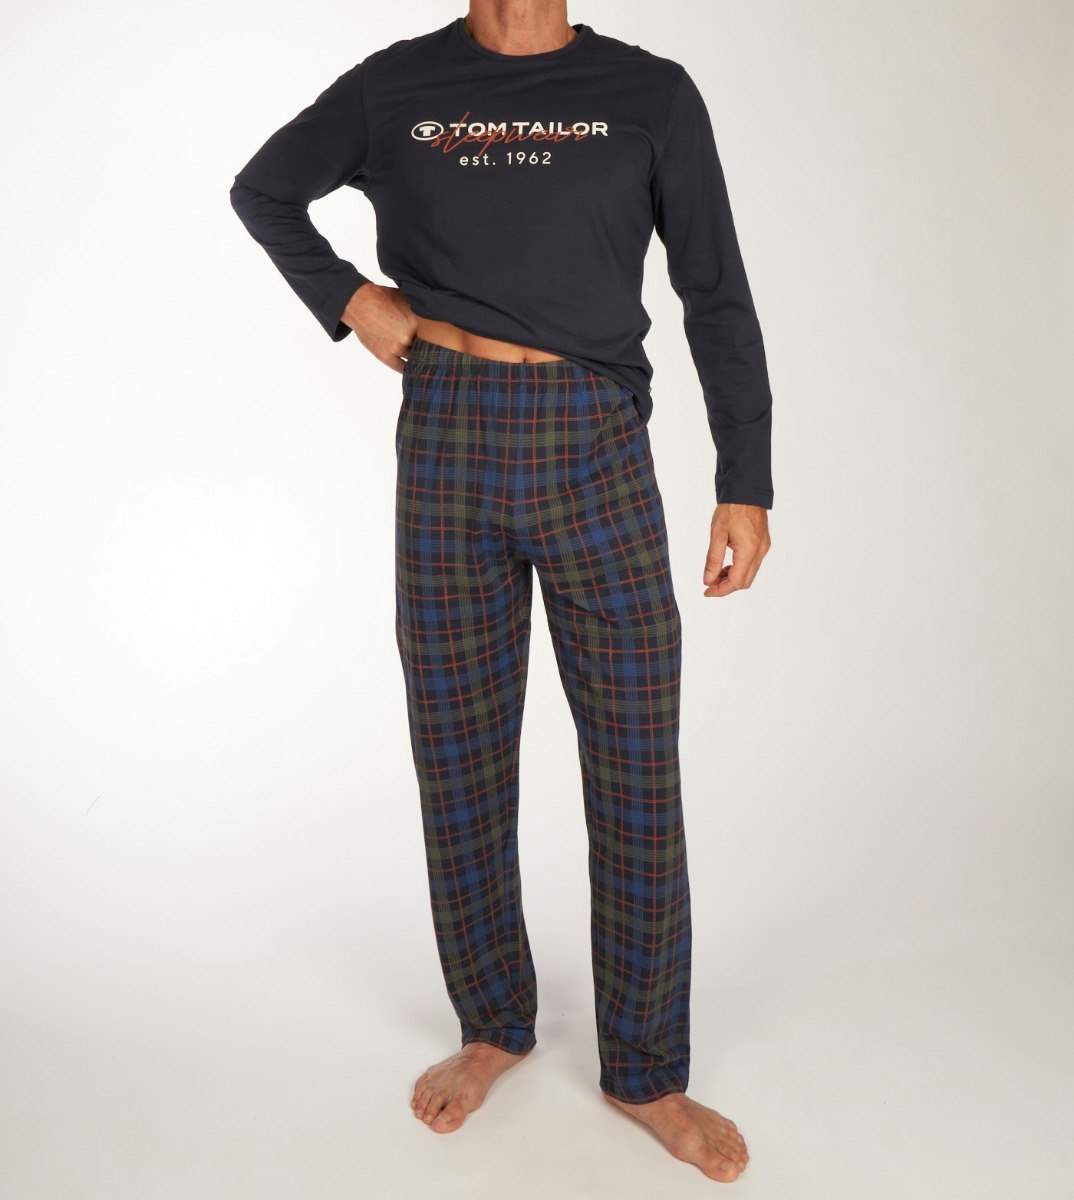 Tom Tailor pyjama lange broek 71345-4009-634 H